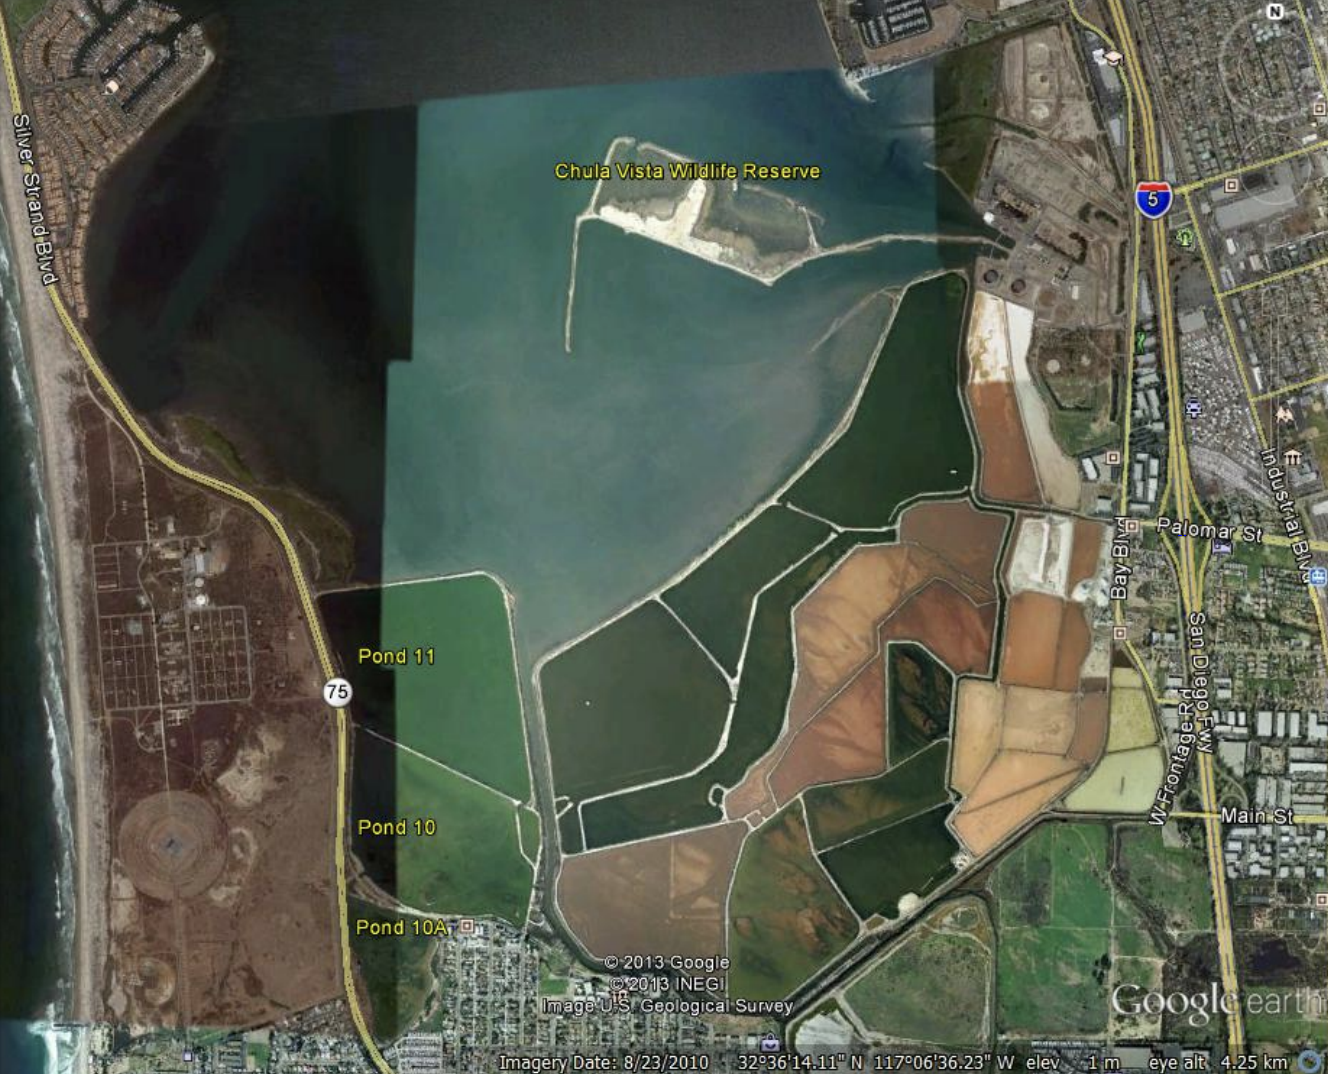 South San Diego Bay Coastal Wetland Restoration Project: Design and Engineering